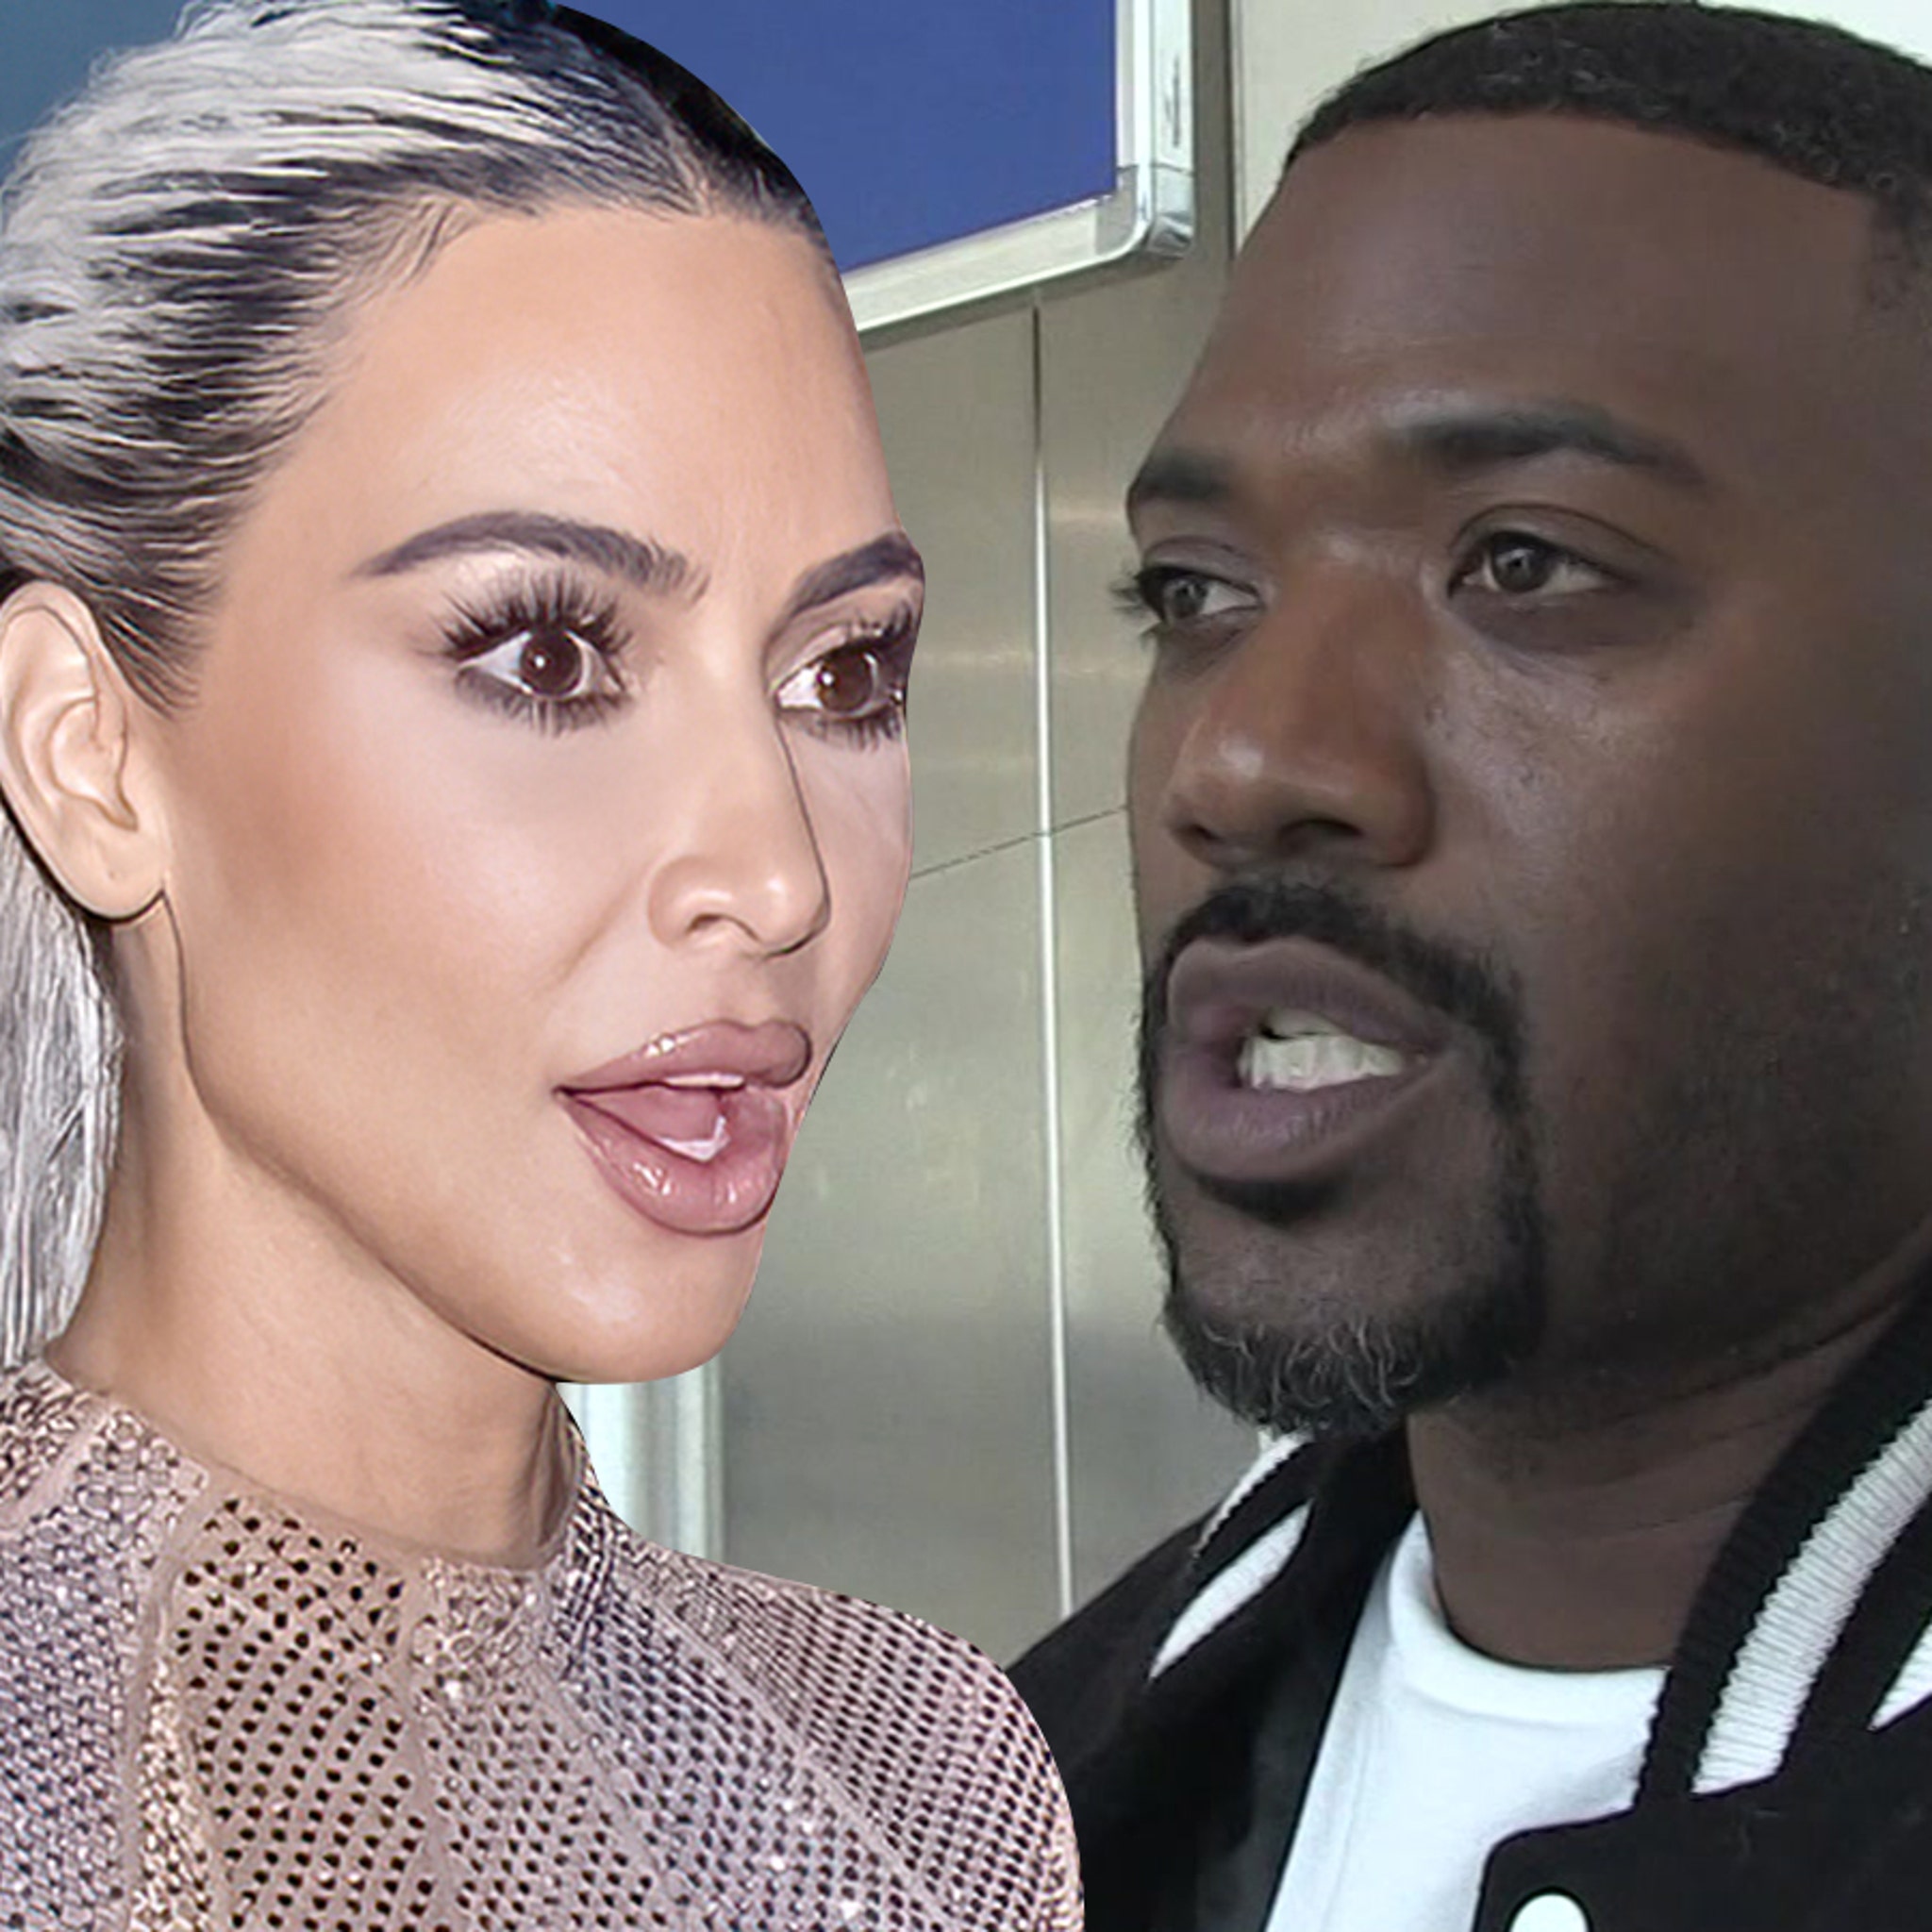 Kim Kardashian Porn Hd Pic - Kim Kardashian and Ray J Got Email Early on About Sex Tape Profits